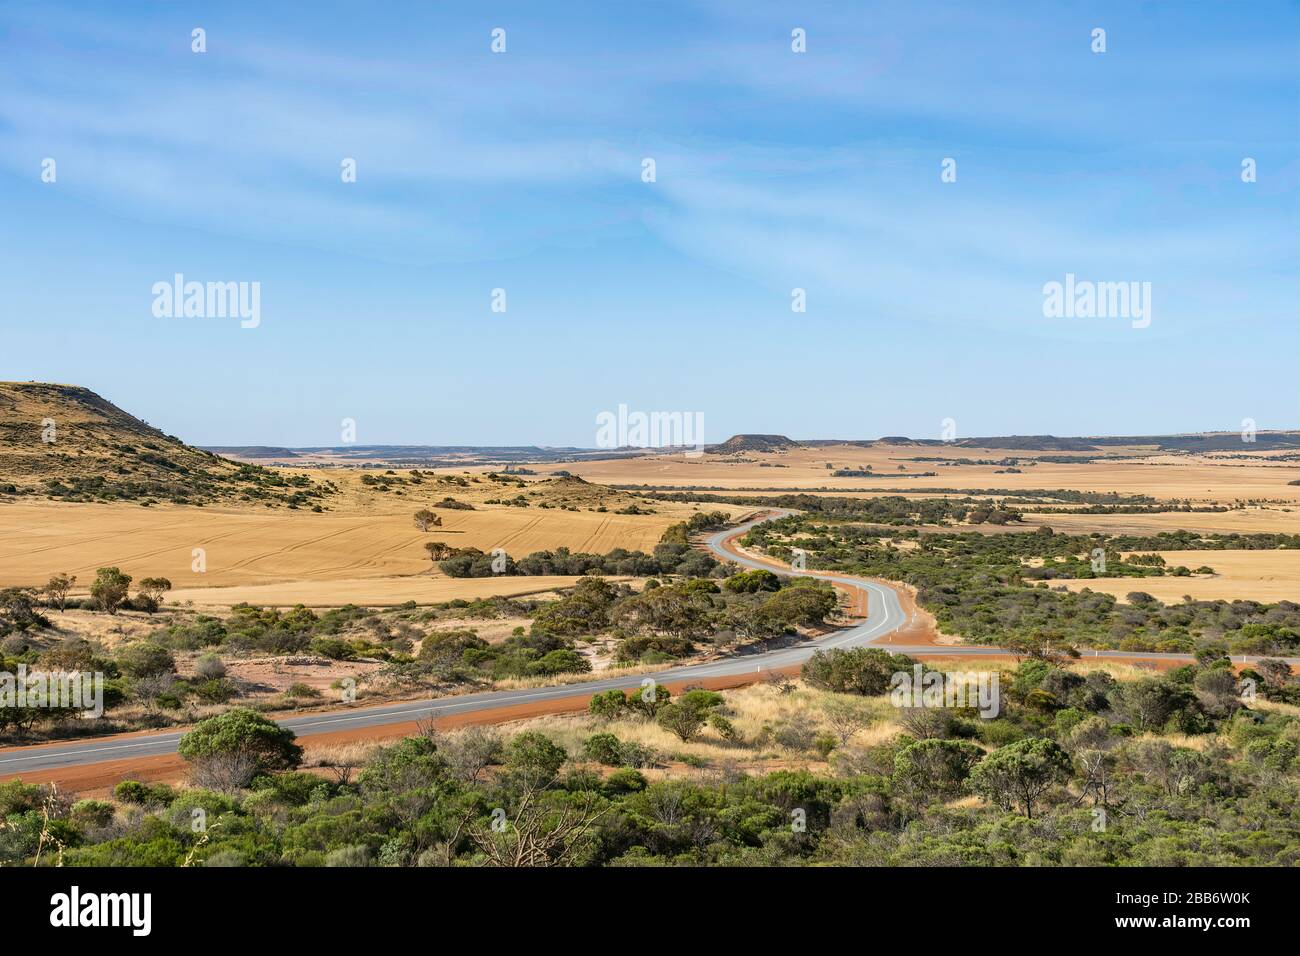 Winding road through rural landscape, Mid West region, Western Australia, Australia Stock Photo